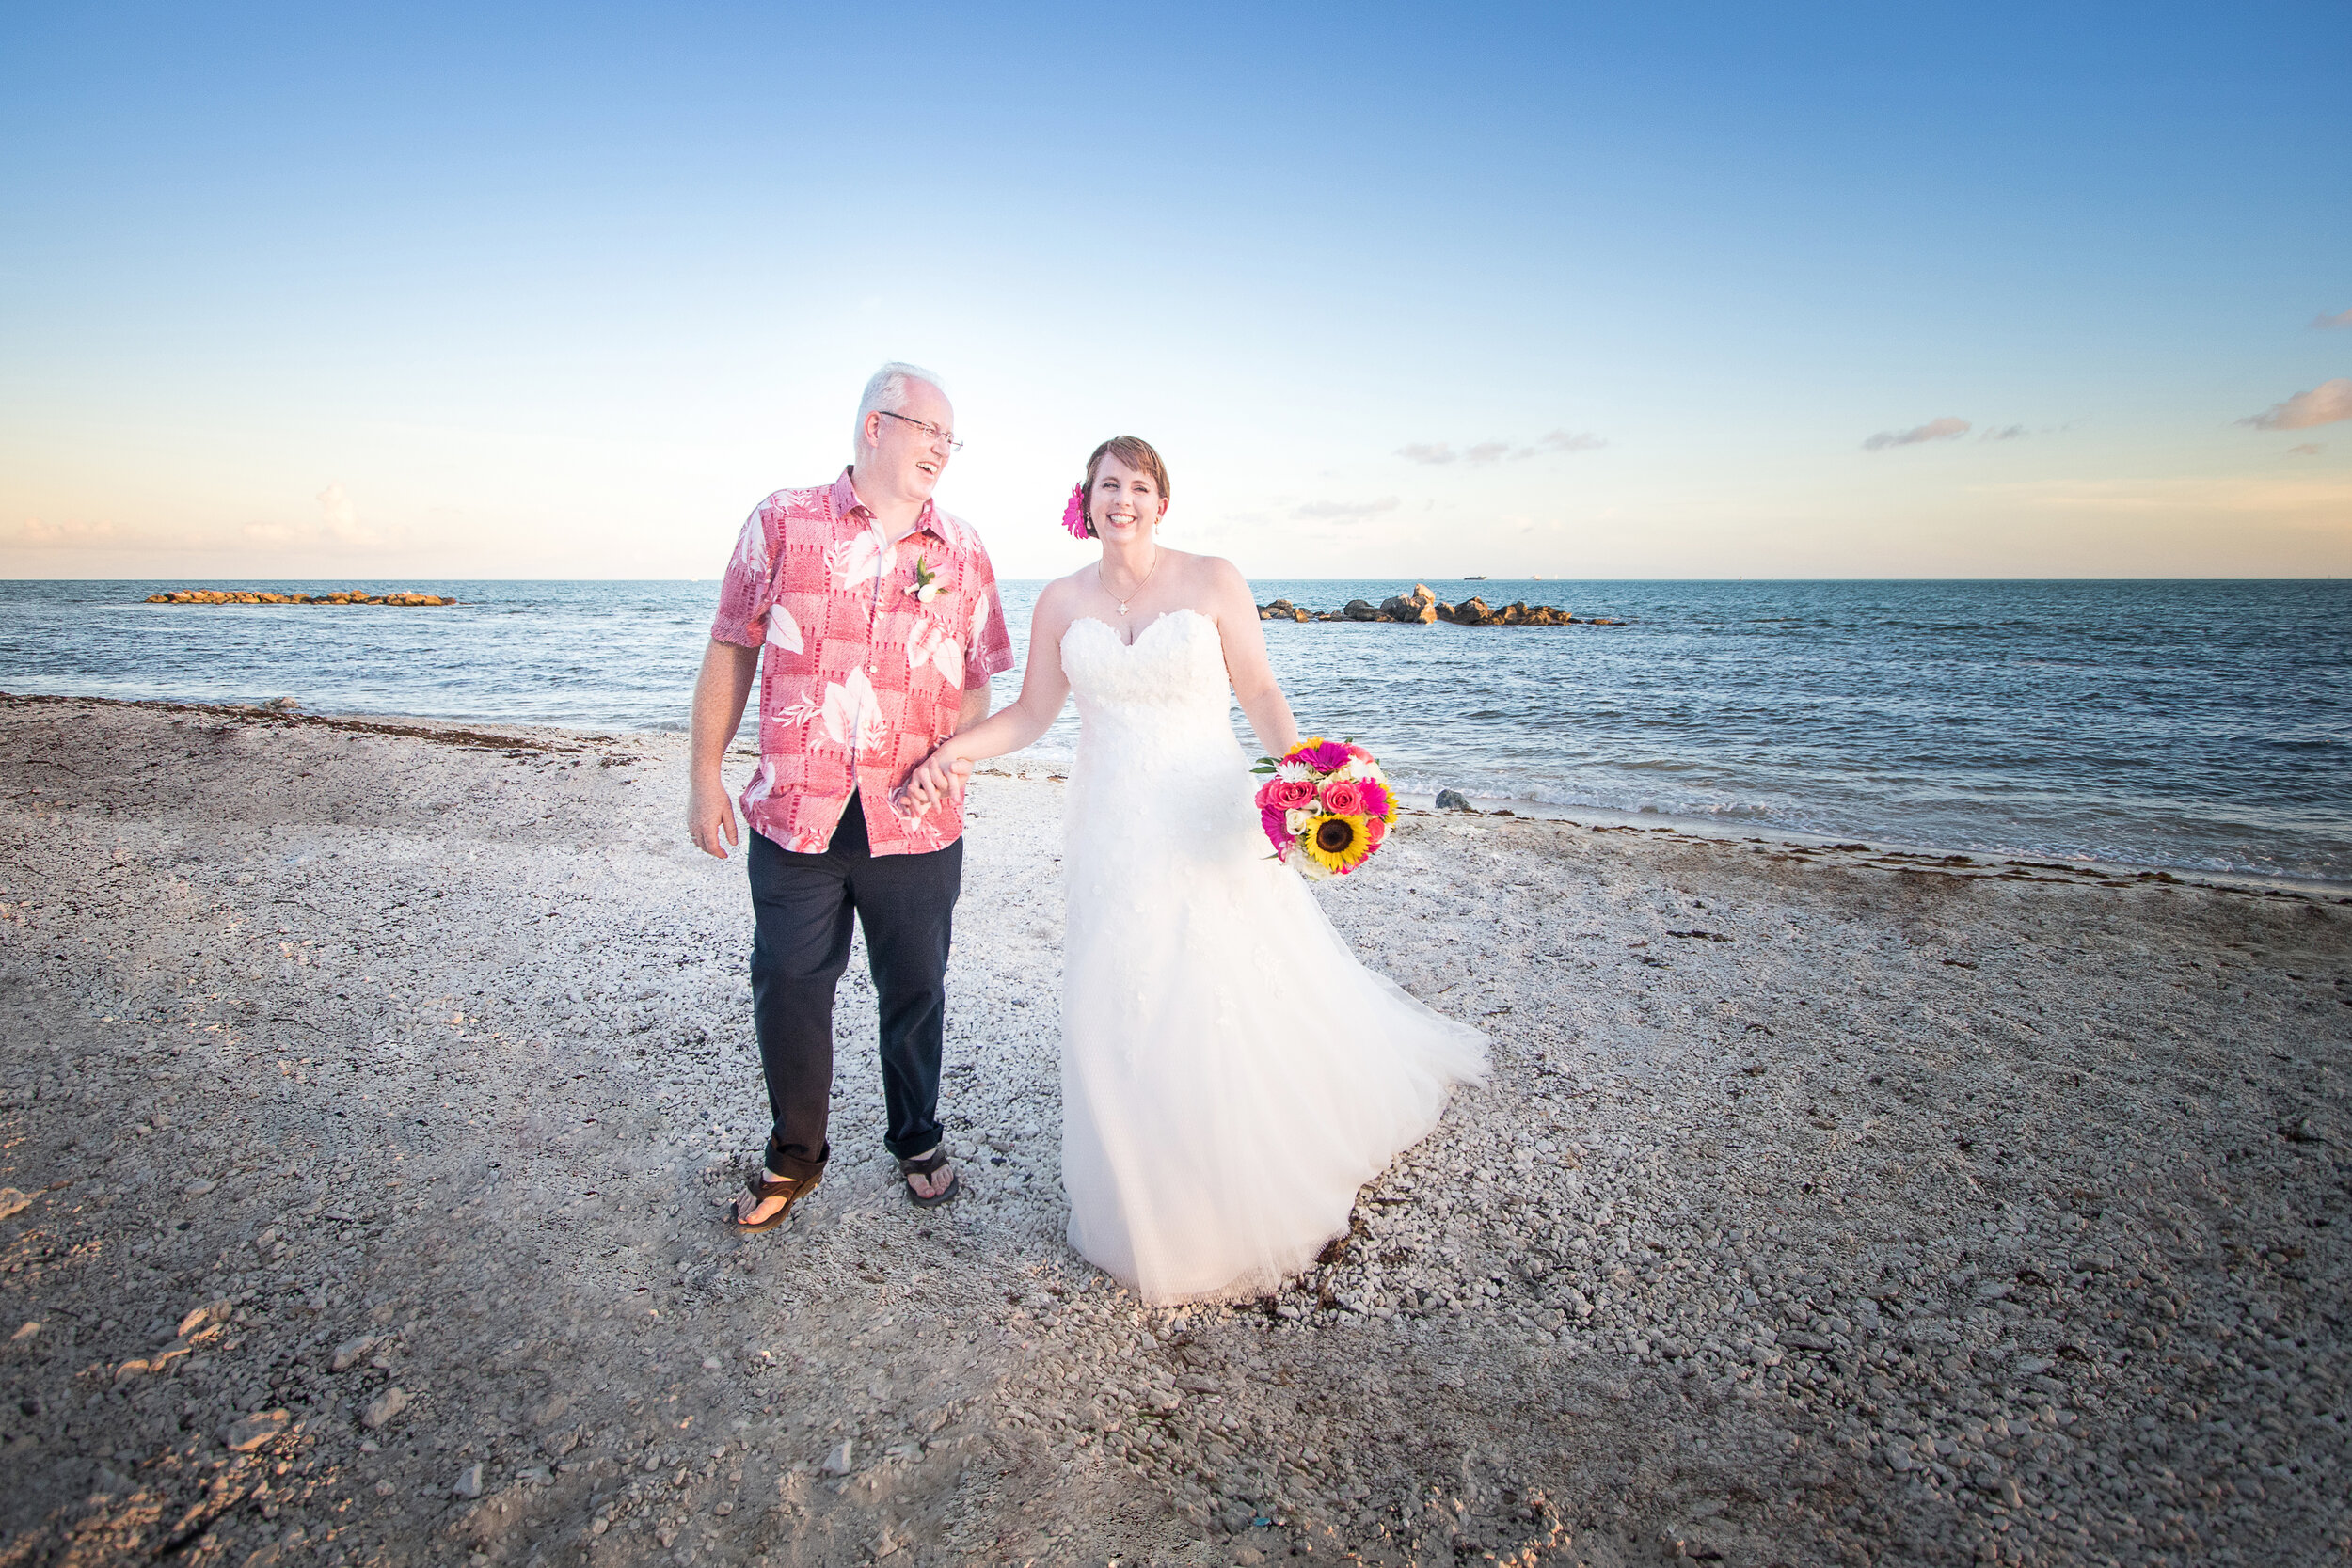 Retouching Key West beach wedding photo - after